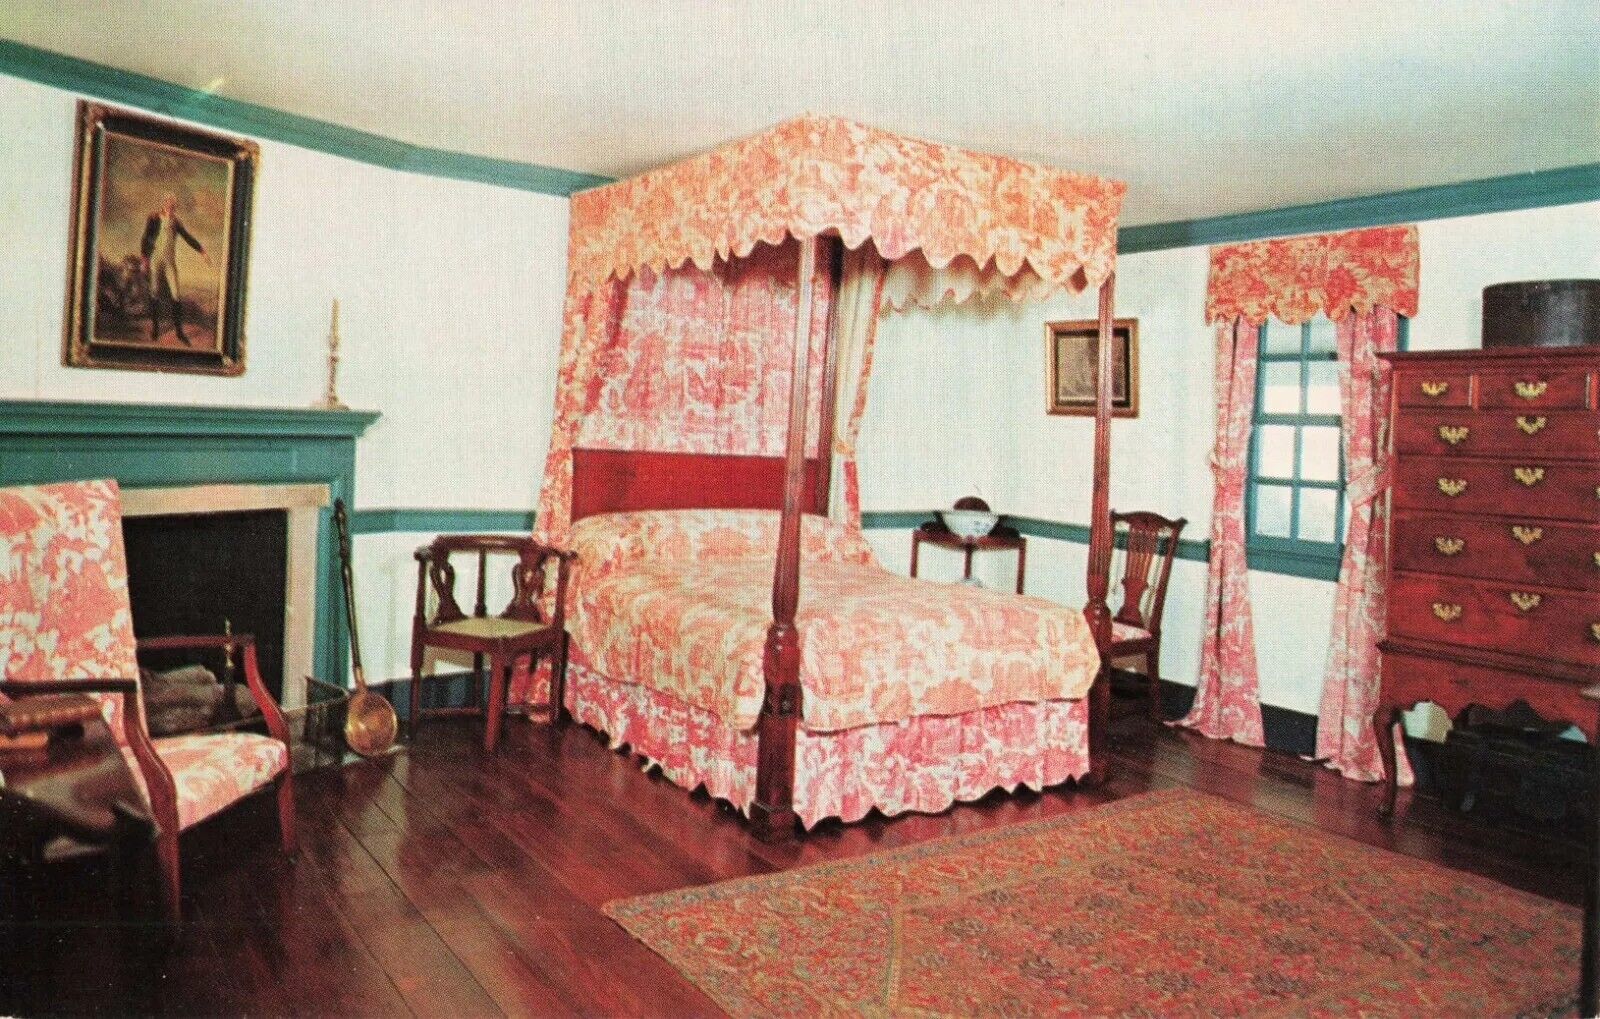 The Lafayette Bedroom at Mount Vernon - Virginia VA - Postcard